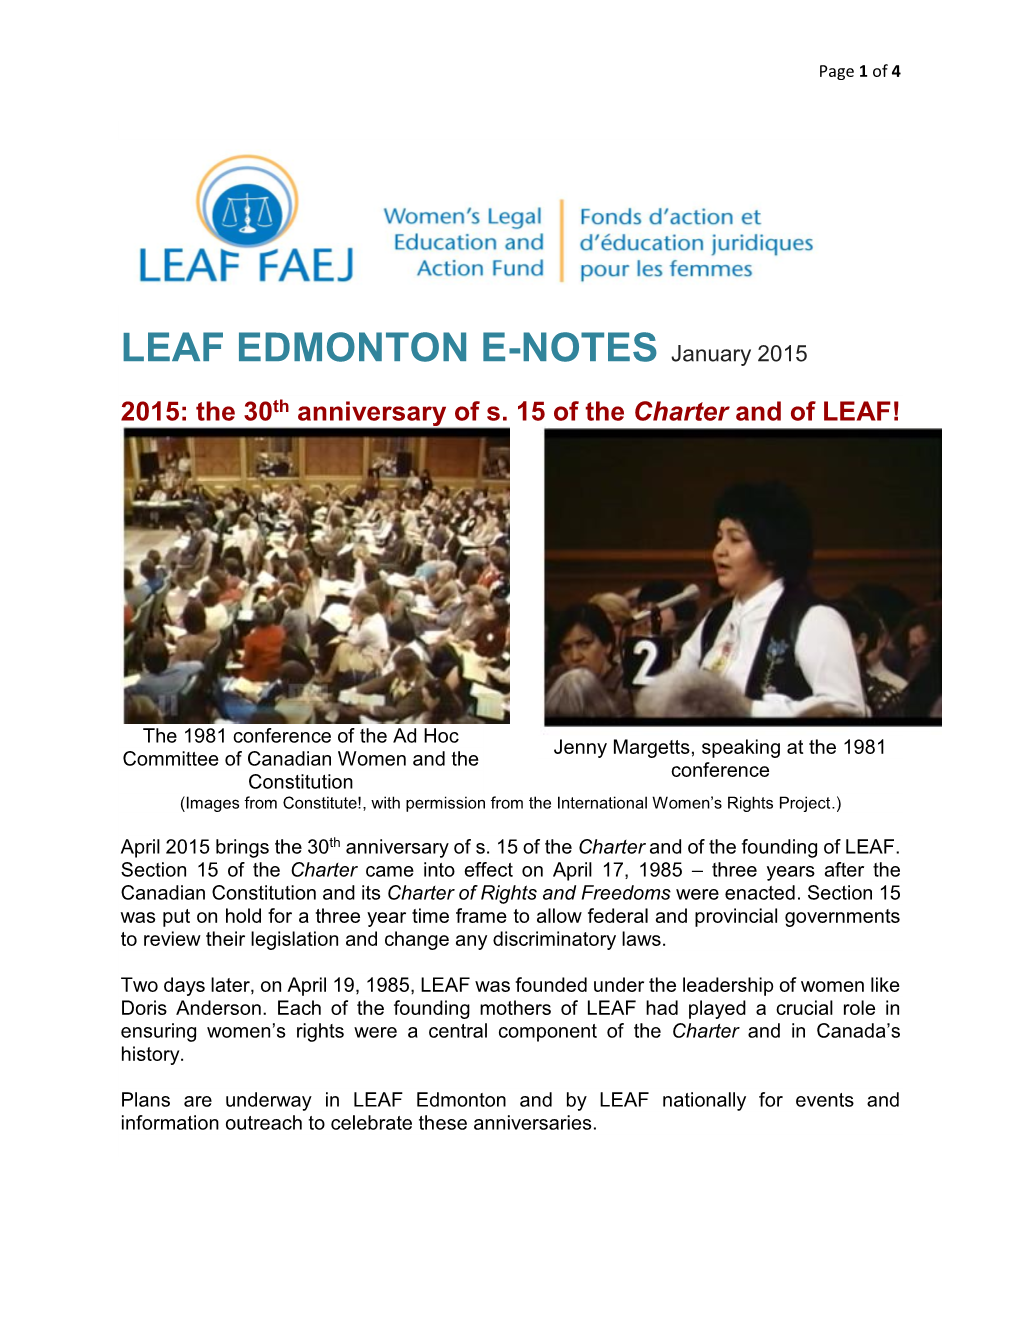 LEAF Edmonton E-Notes 2015 January